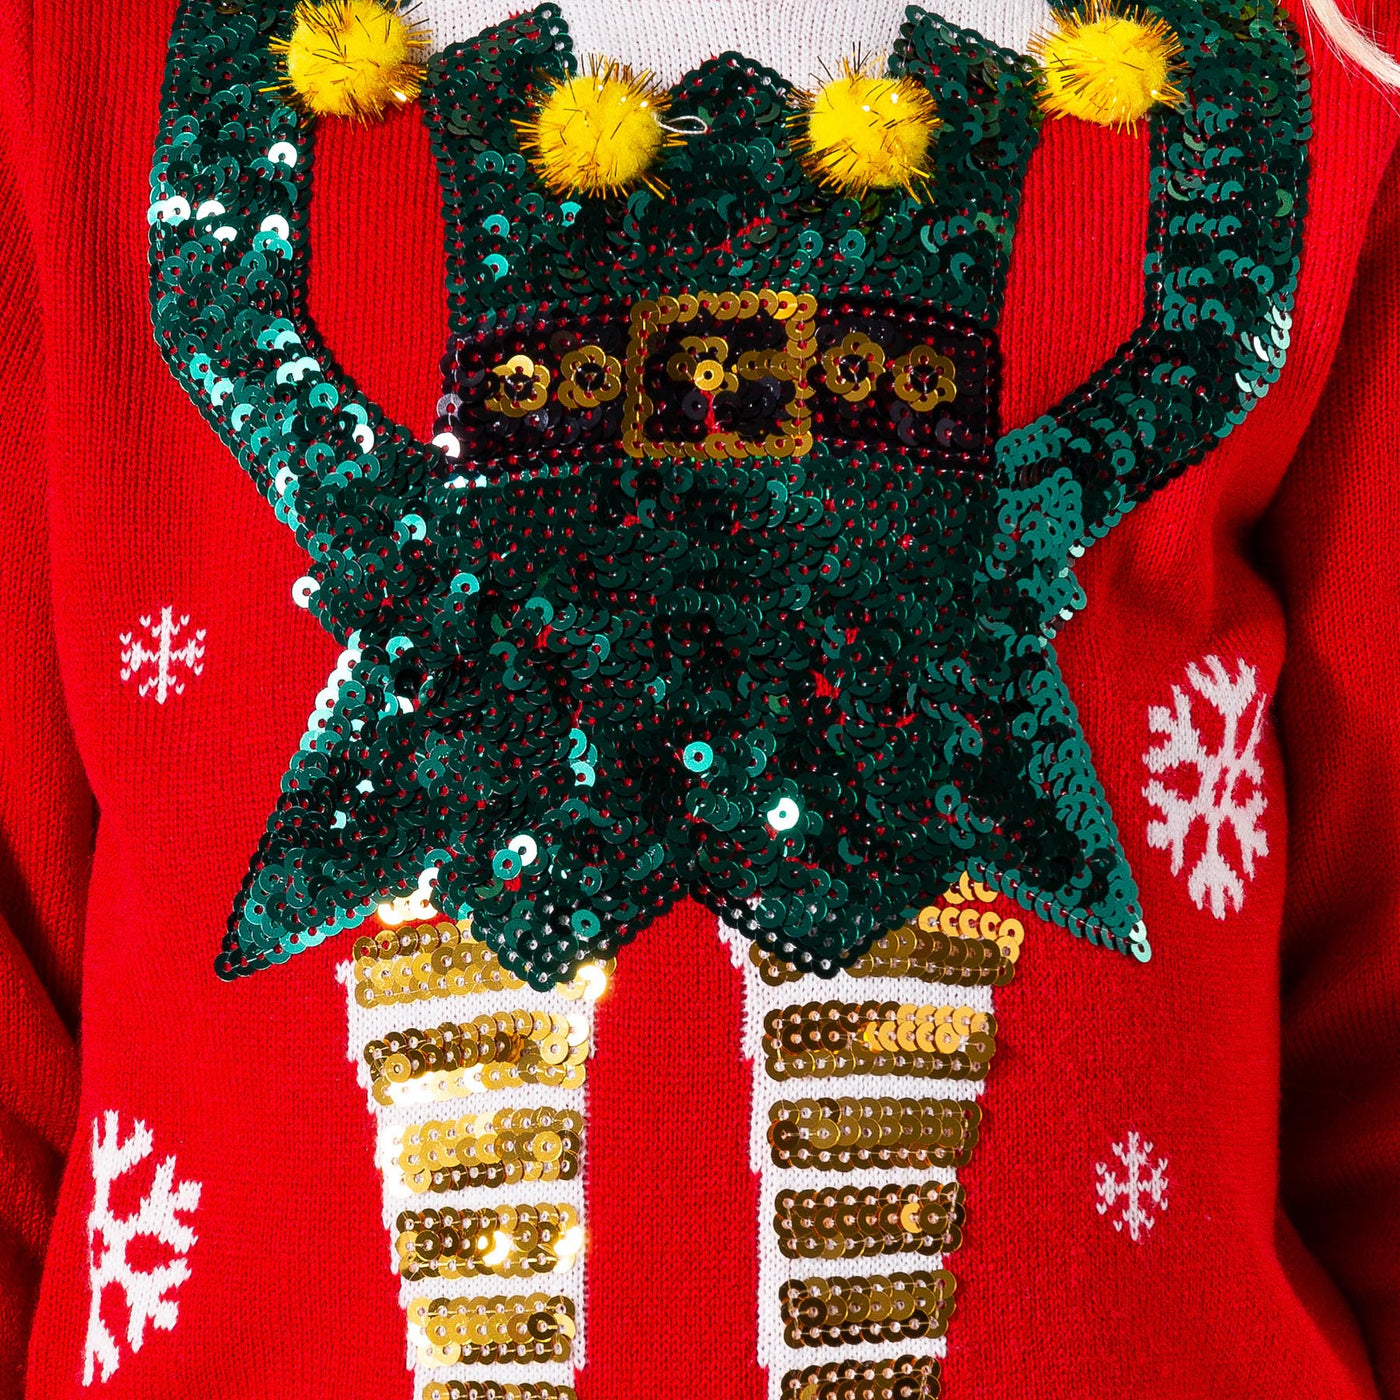 Kids' Elf Christmas Sweater